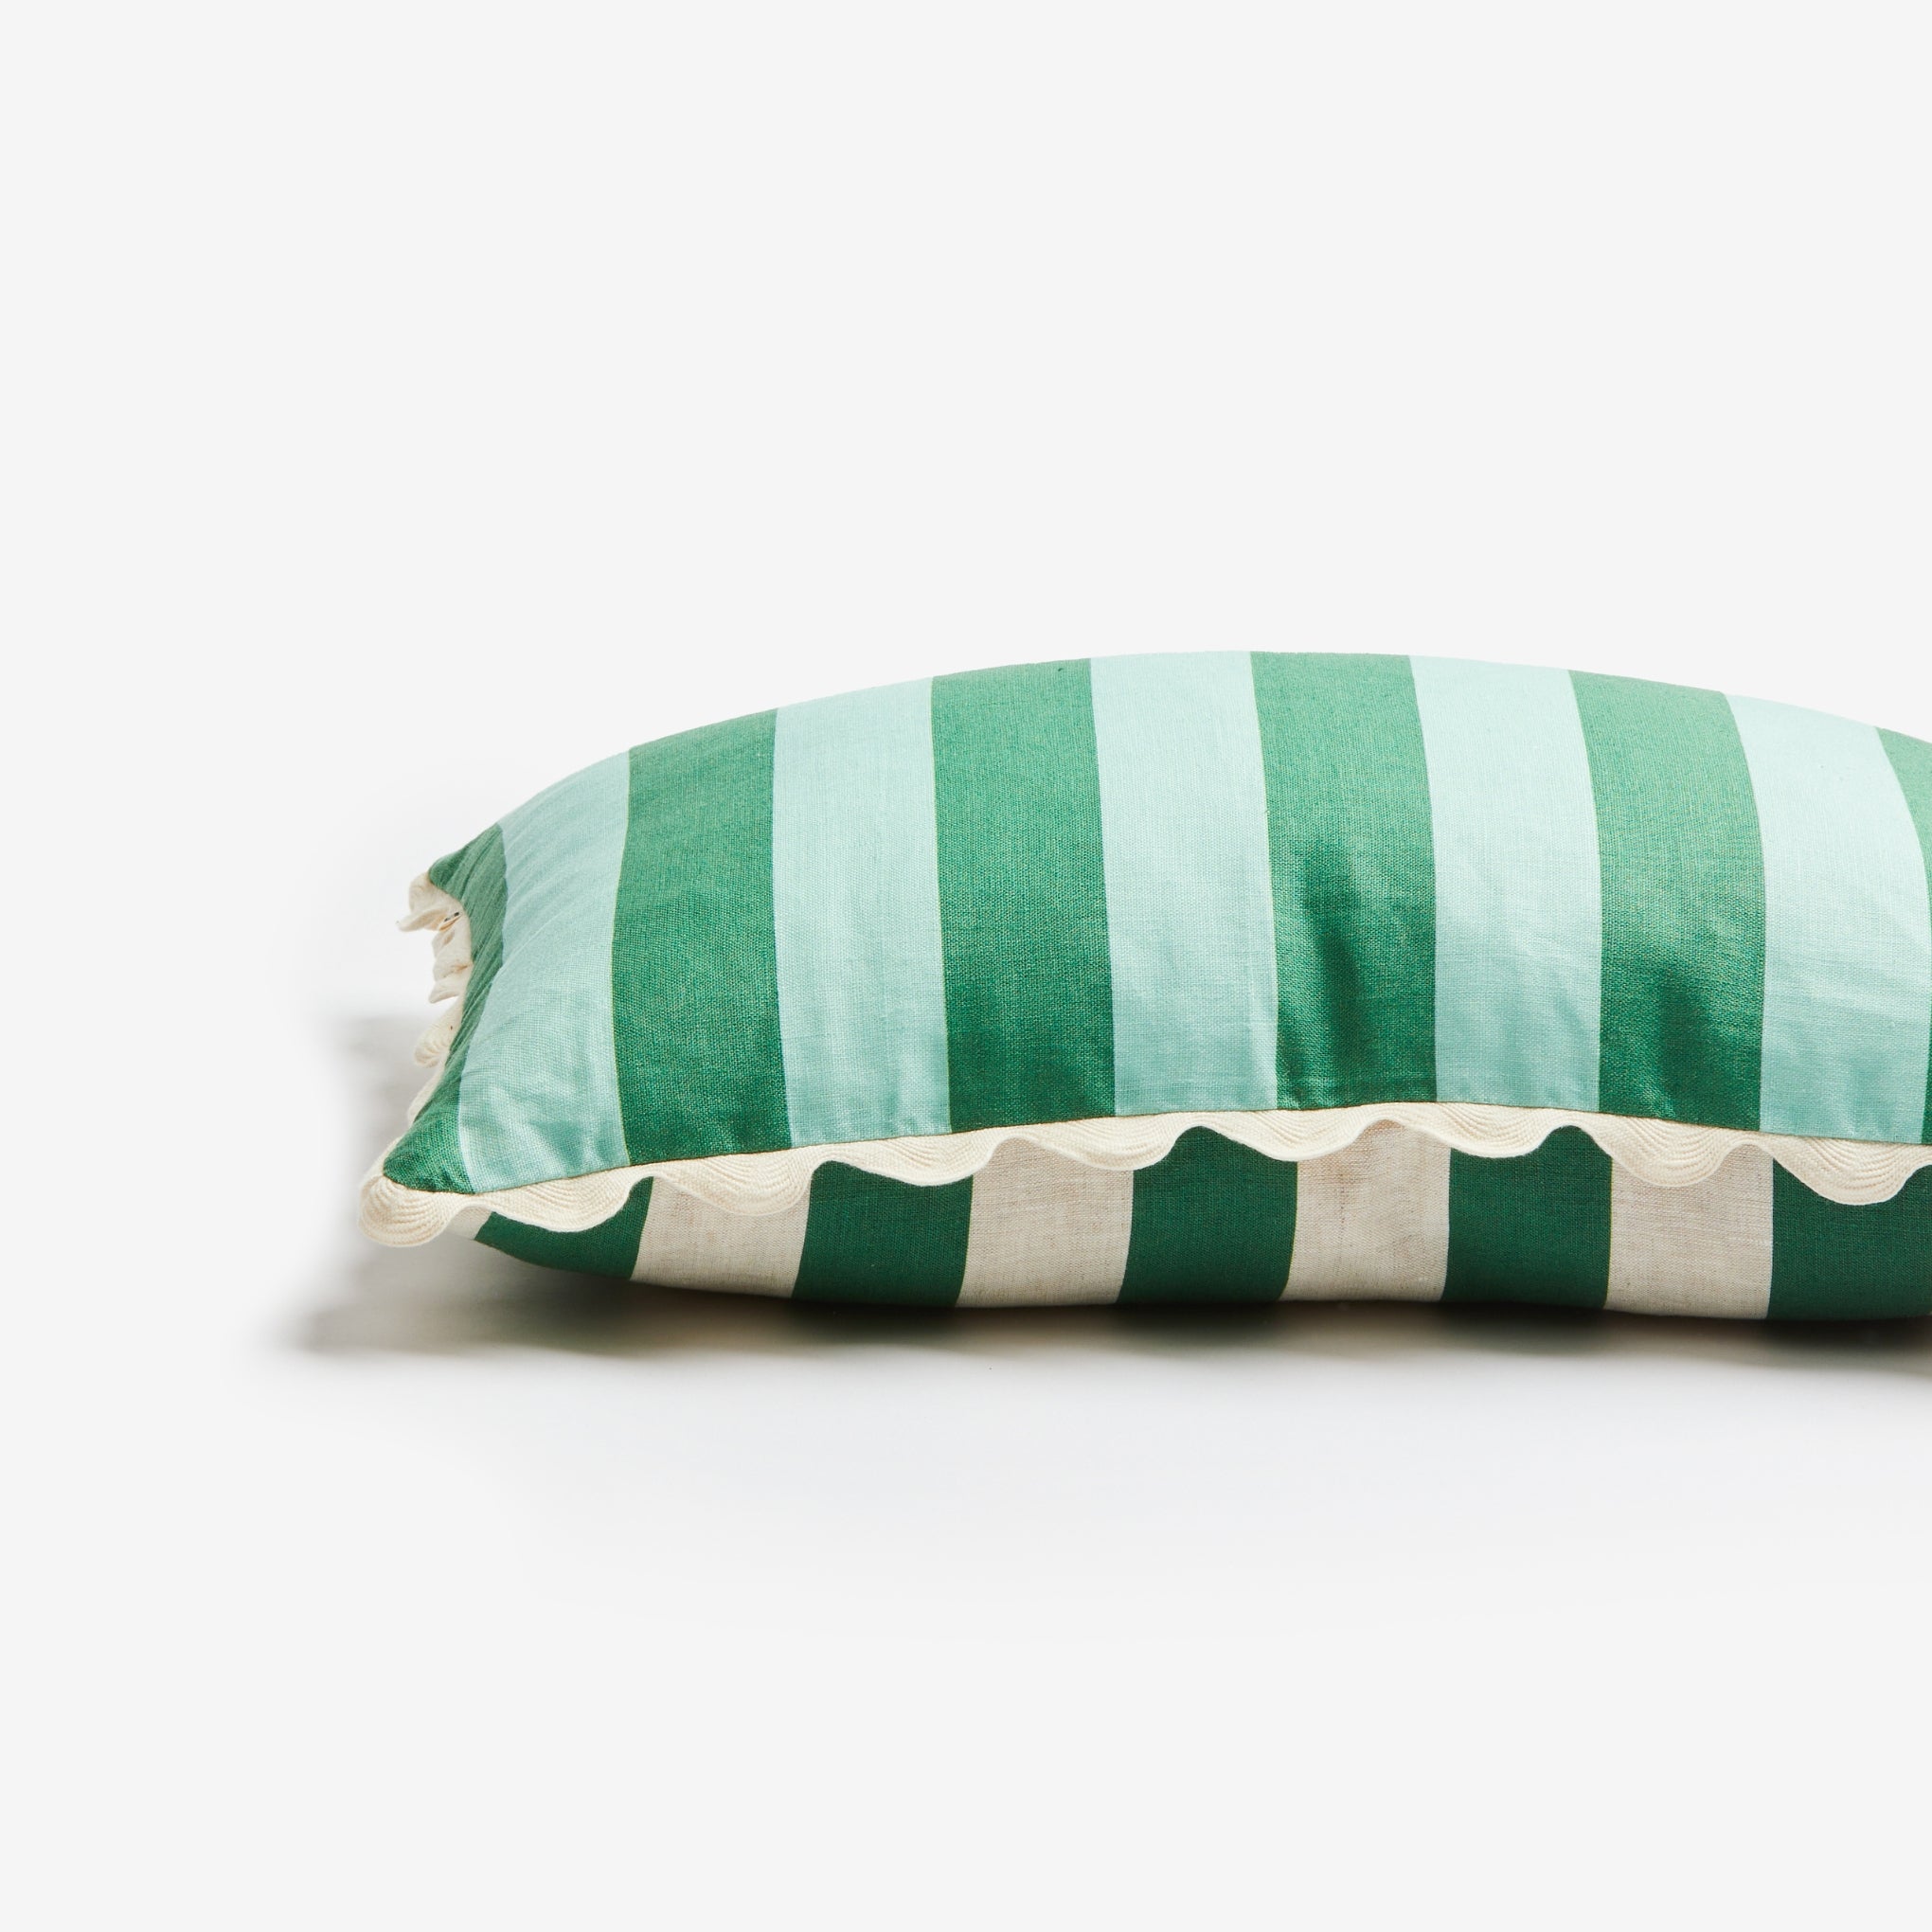 Bold Stripe Verde 60x40cm Cushion